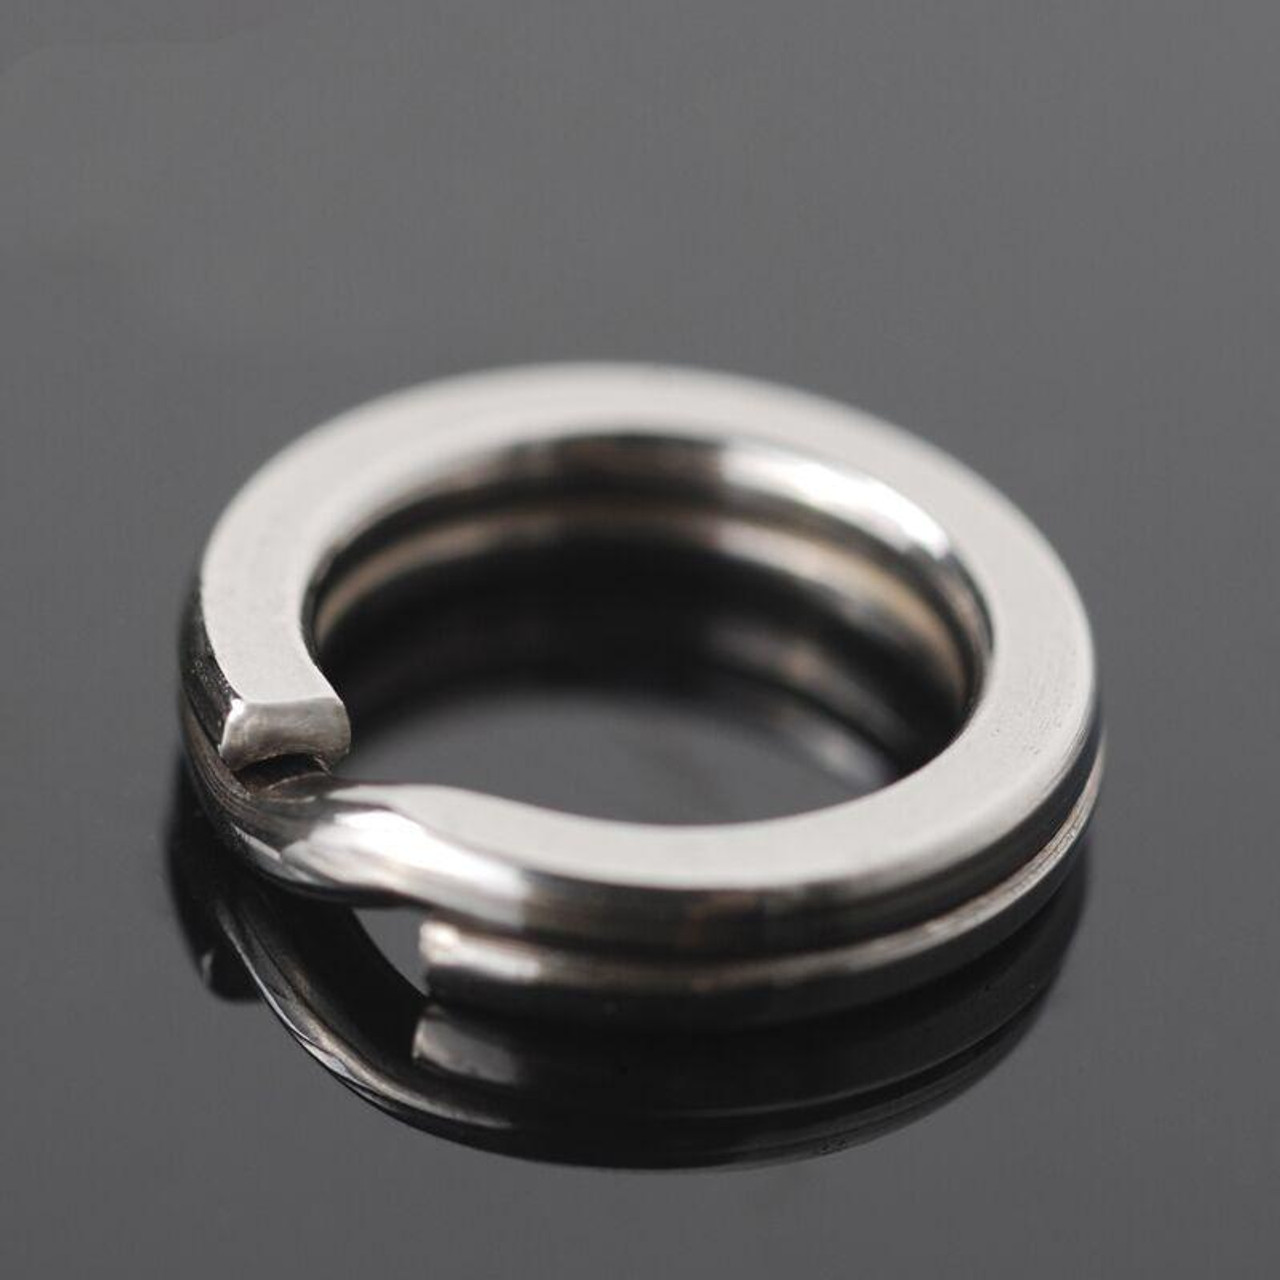 Mild steels Flat Keychain Ring at Rs 0.69/piece in Delhi | ID: 23874029755